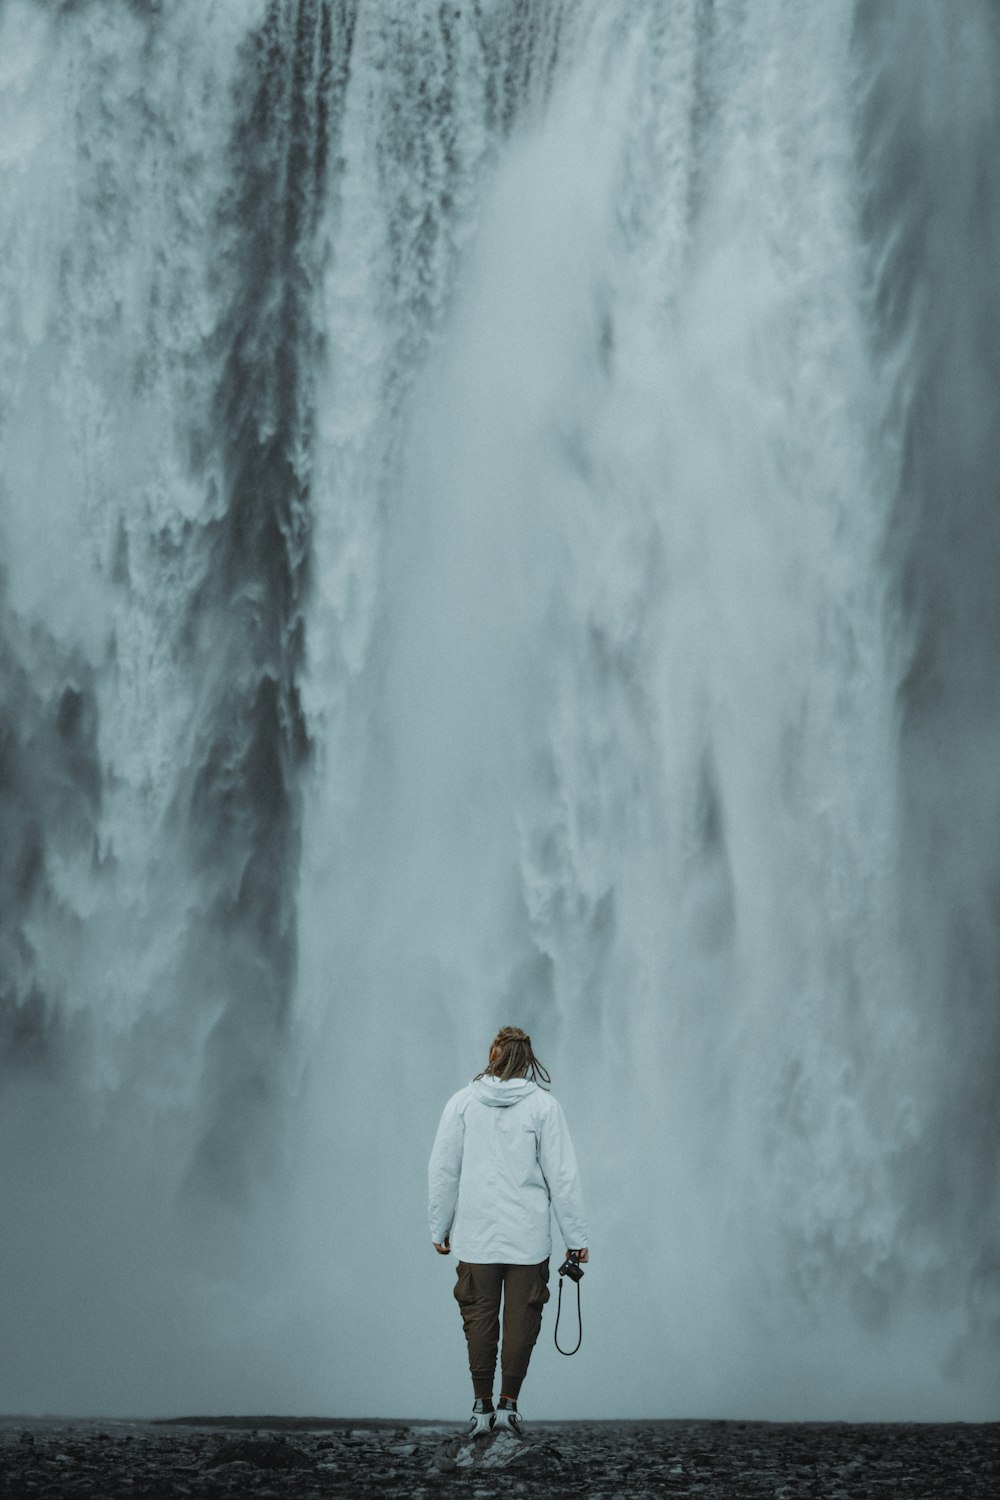 Una persona parada frente a una gran cascada